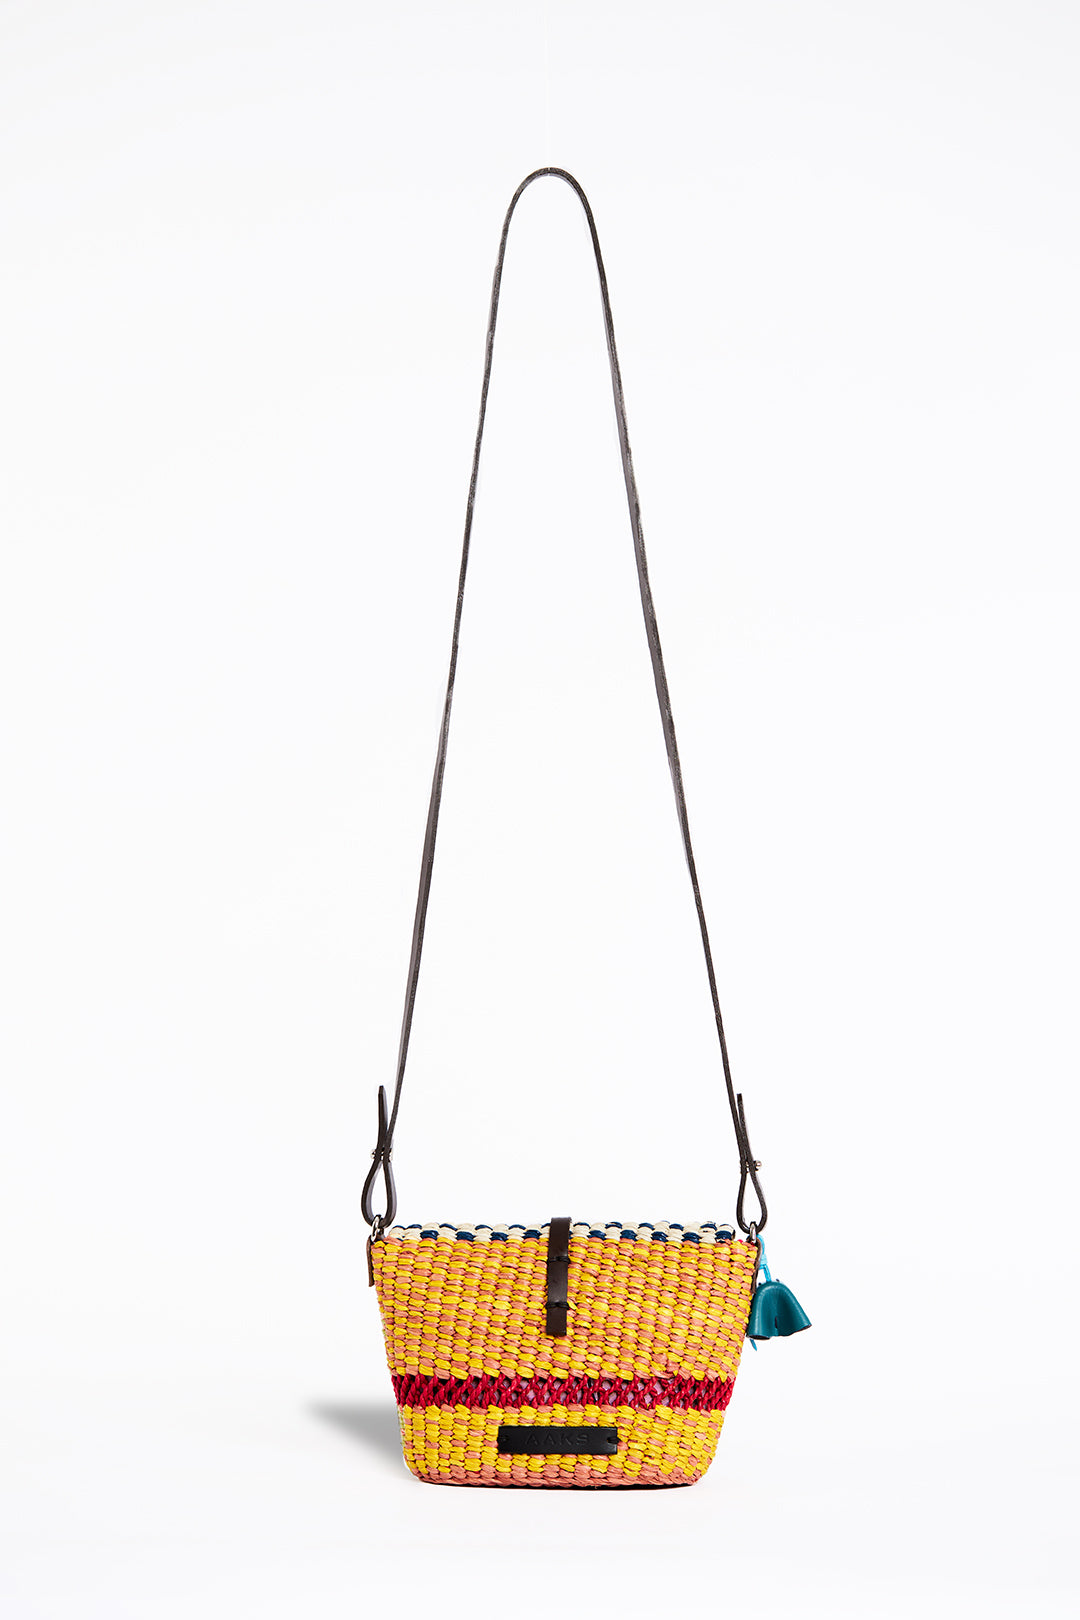 AAKS Bika Yellow handmade micro shoulder bag, long strap, reverse